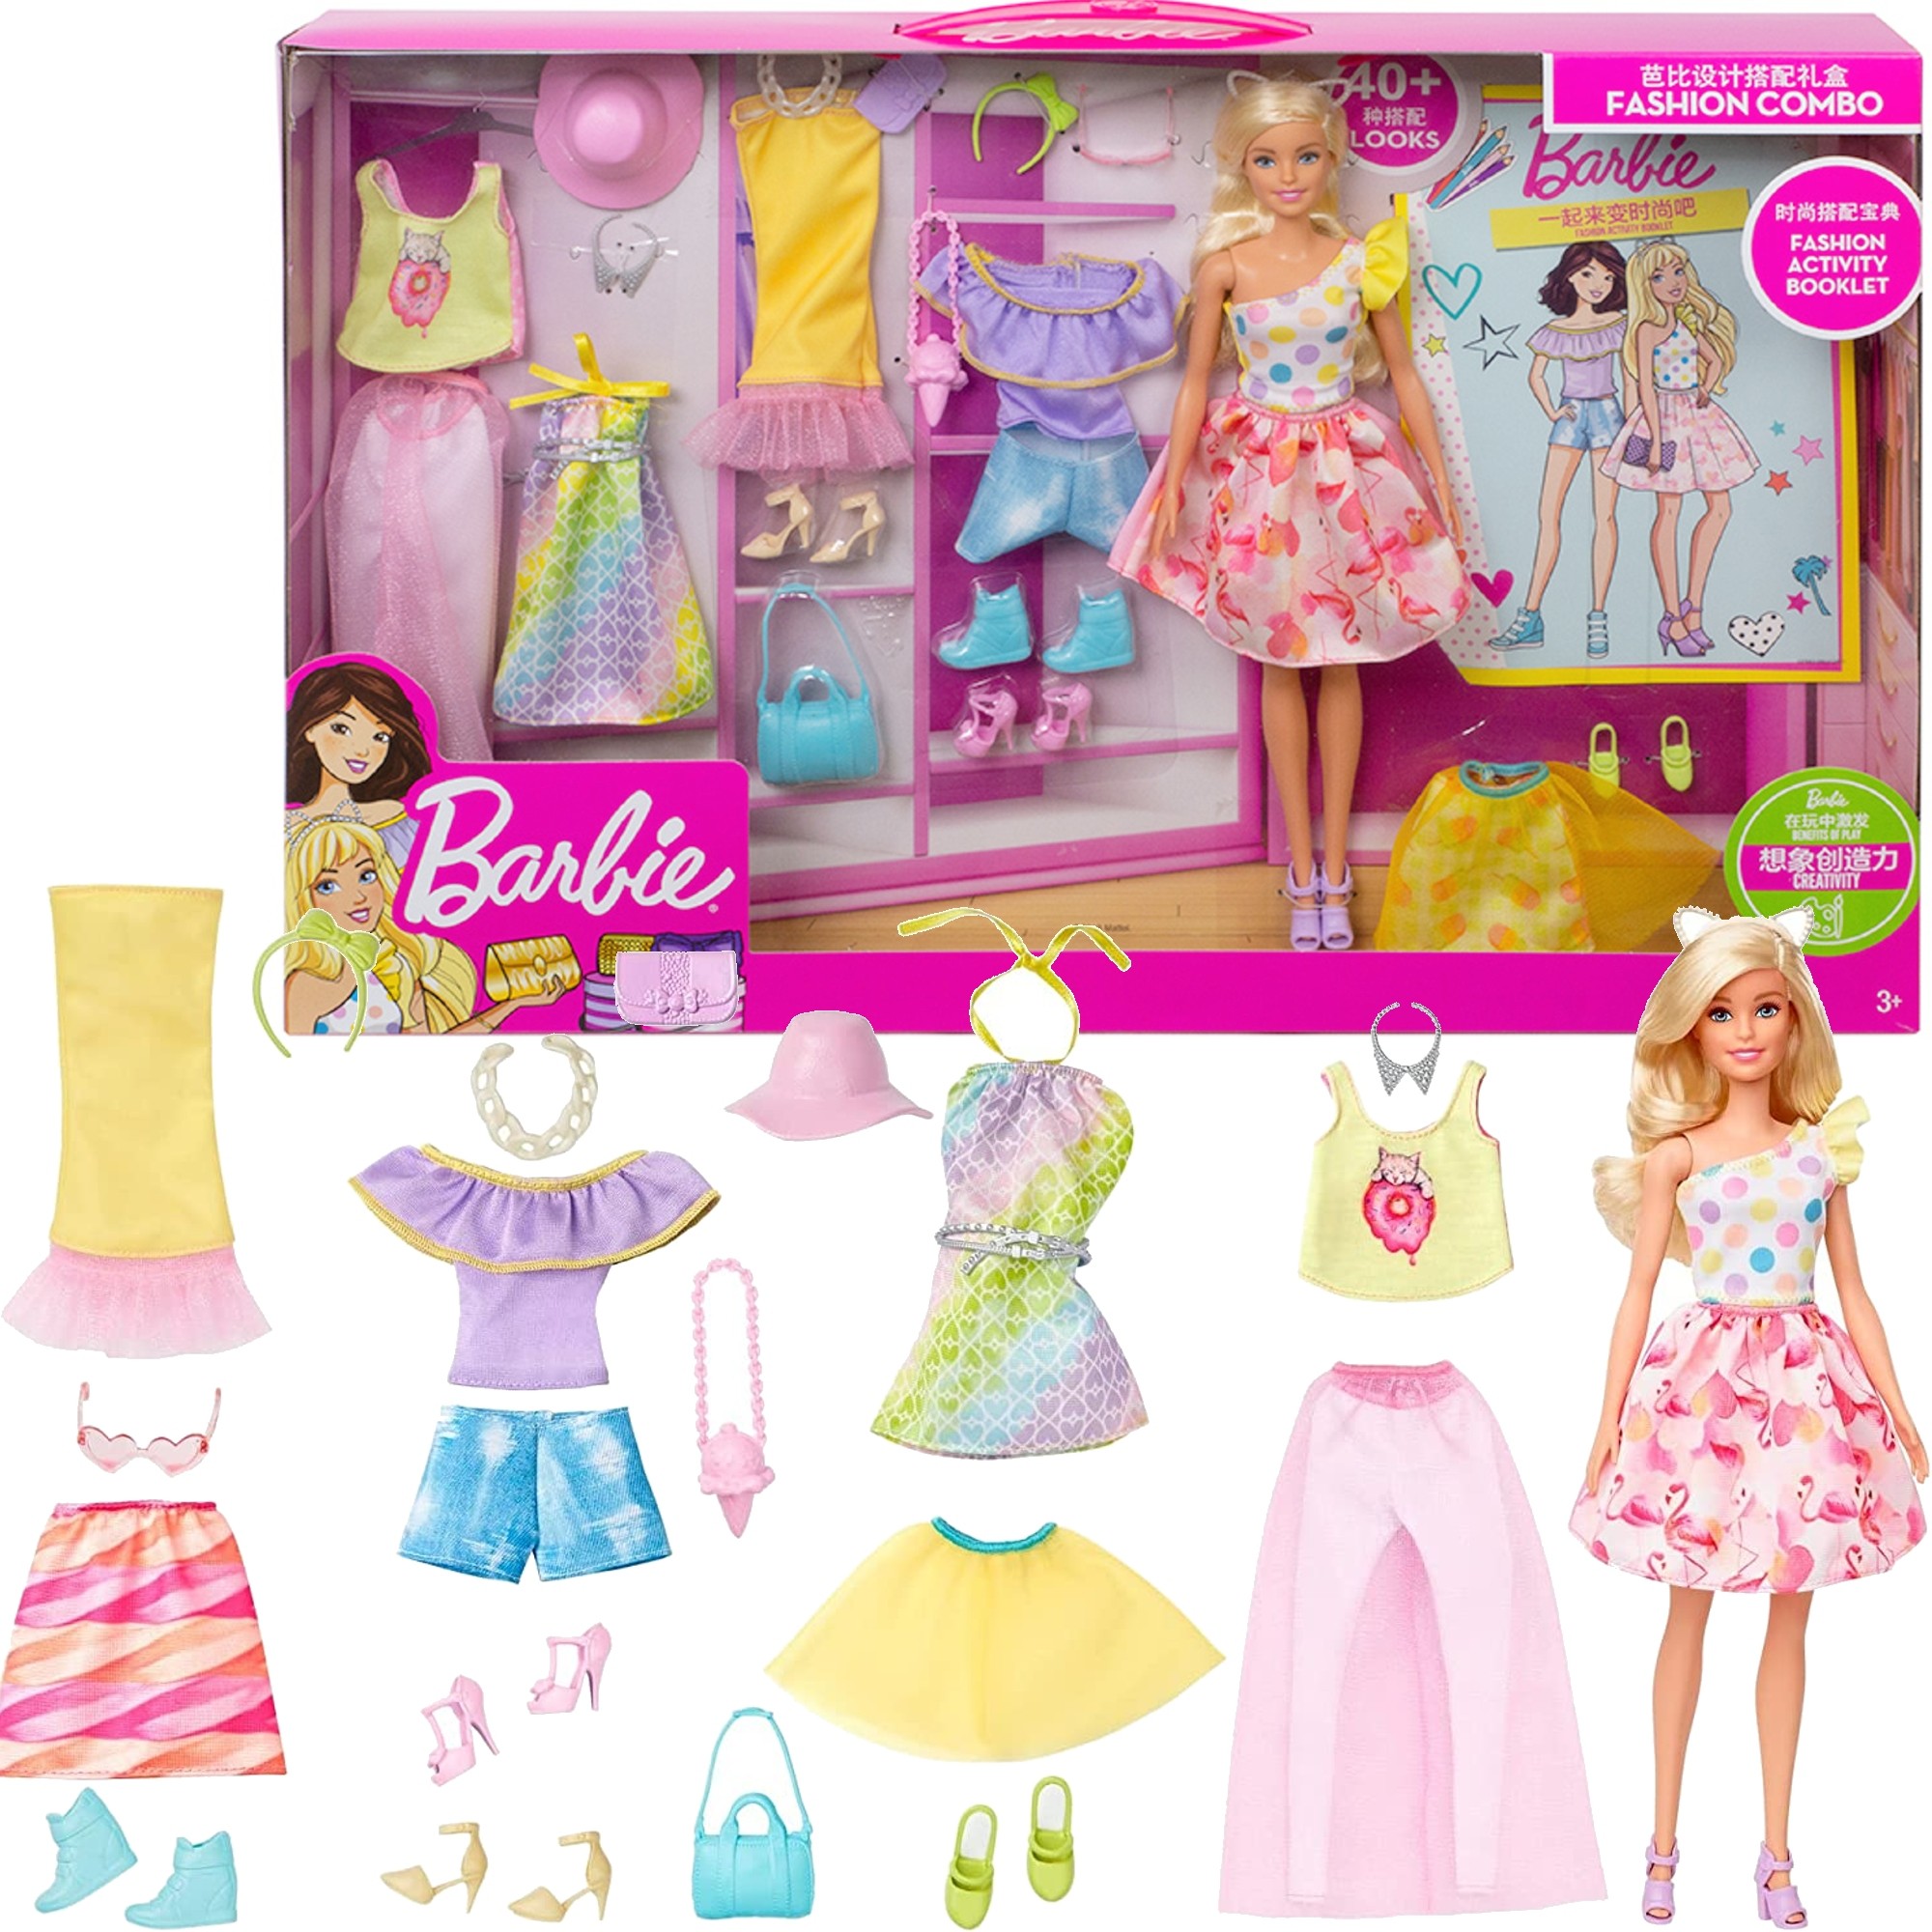 Zestaw Barbie Fashion Combo modna lalka + ubranka